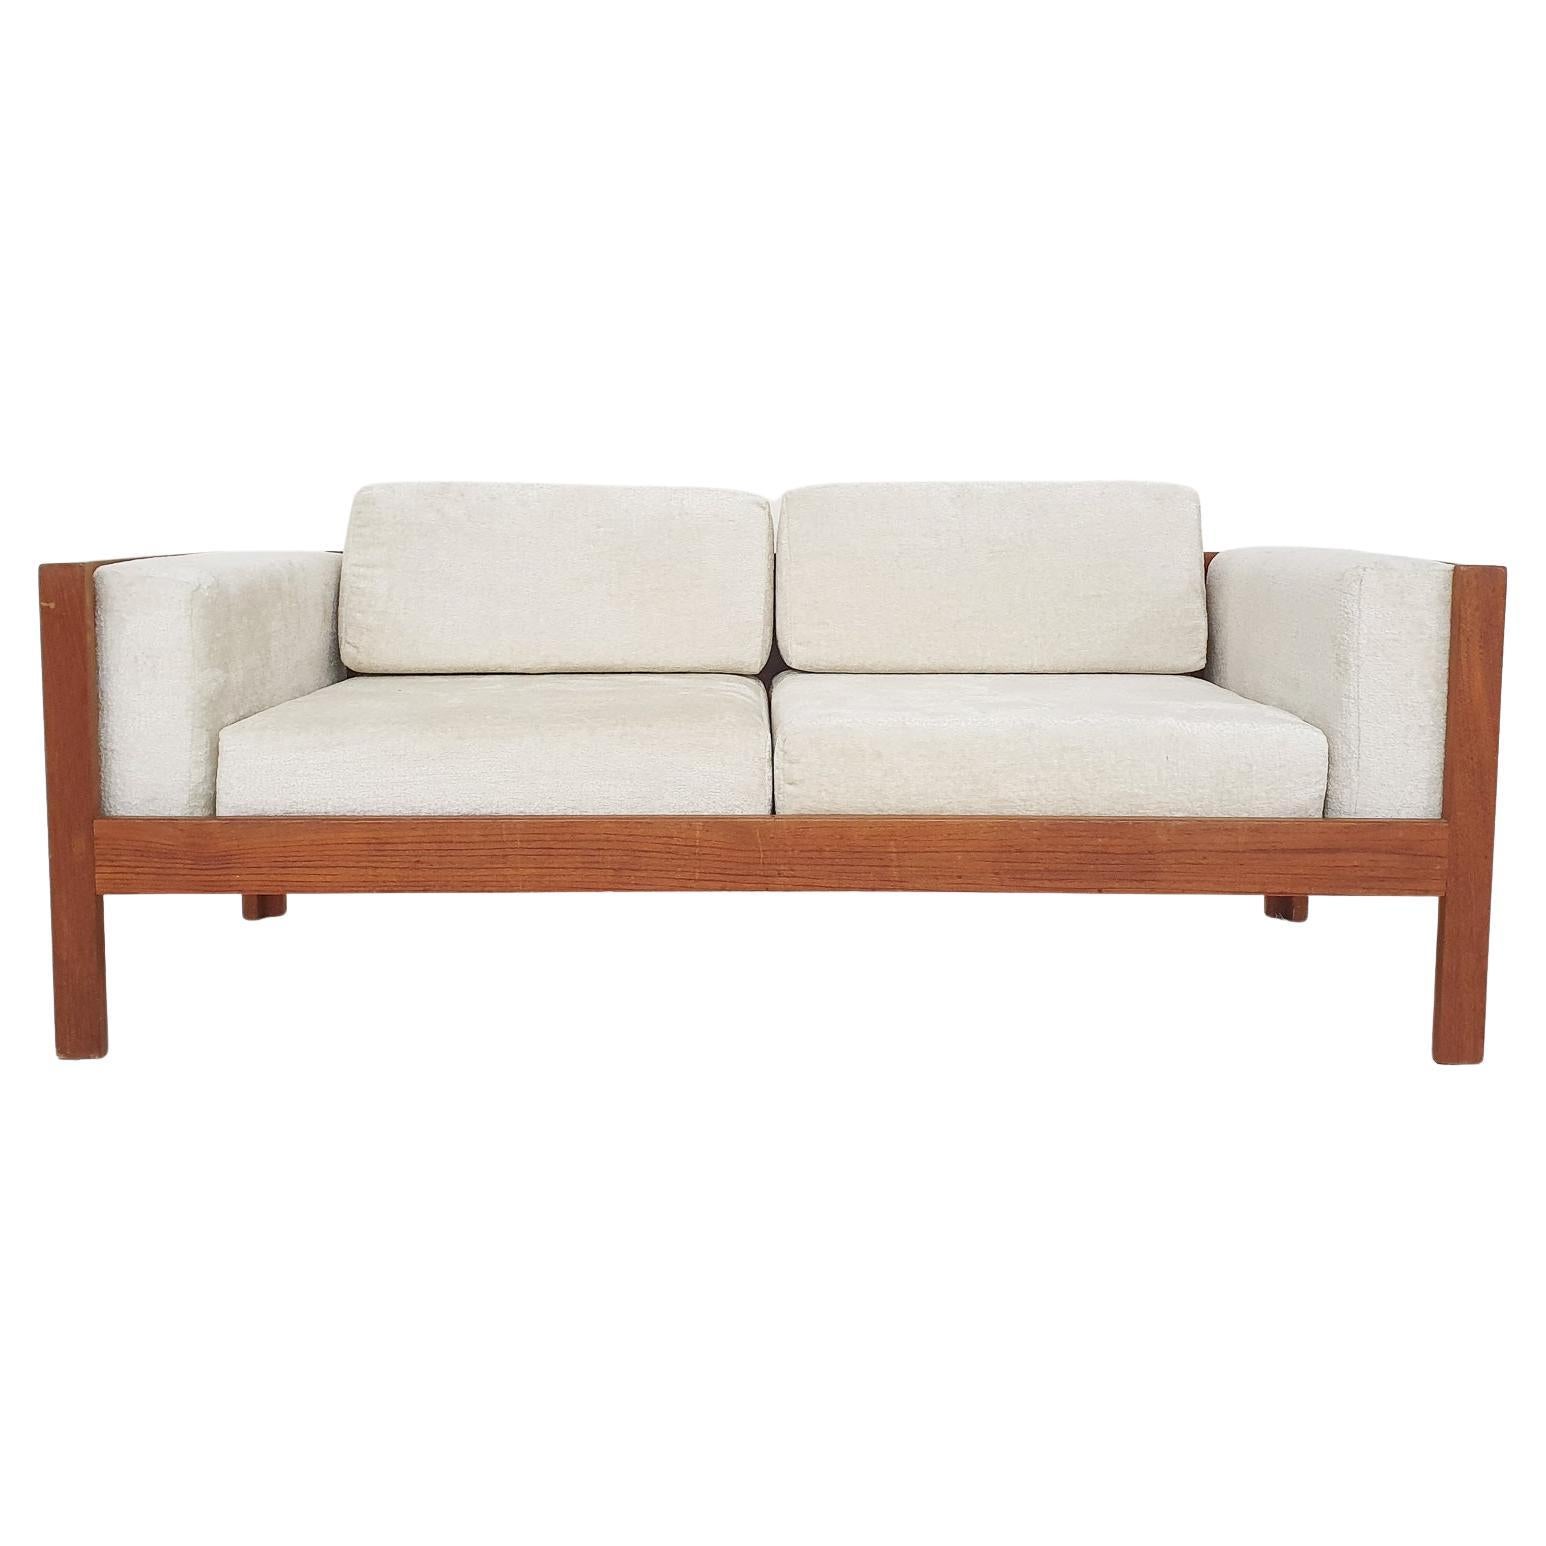 Scandinavian modern sofa in teak and boucle, 1960's For Sale